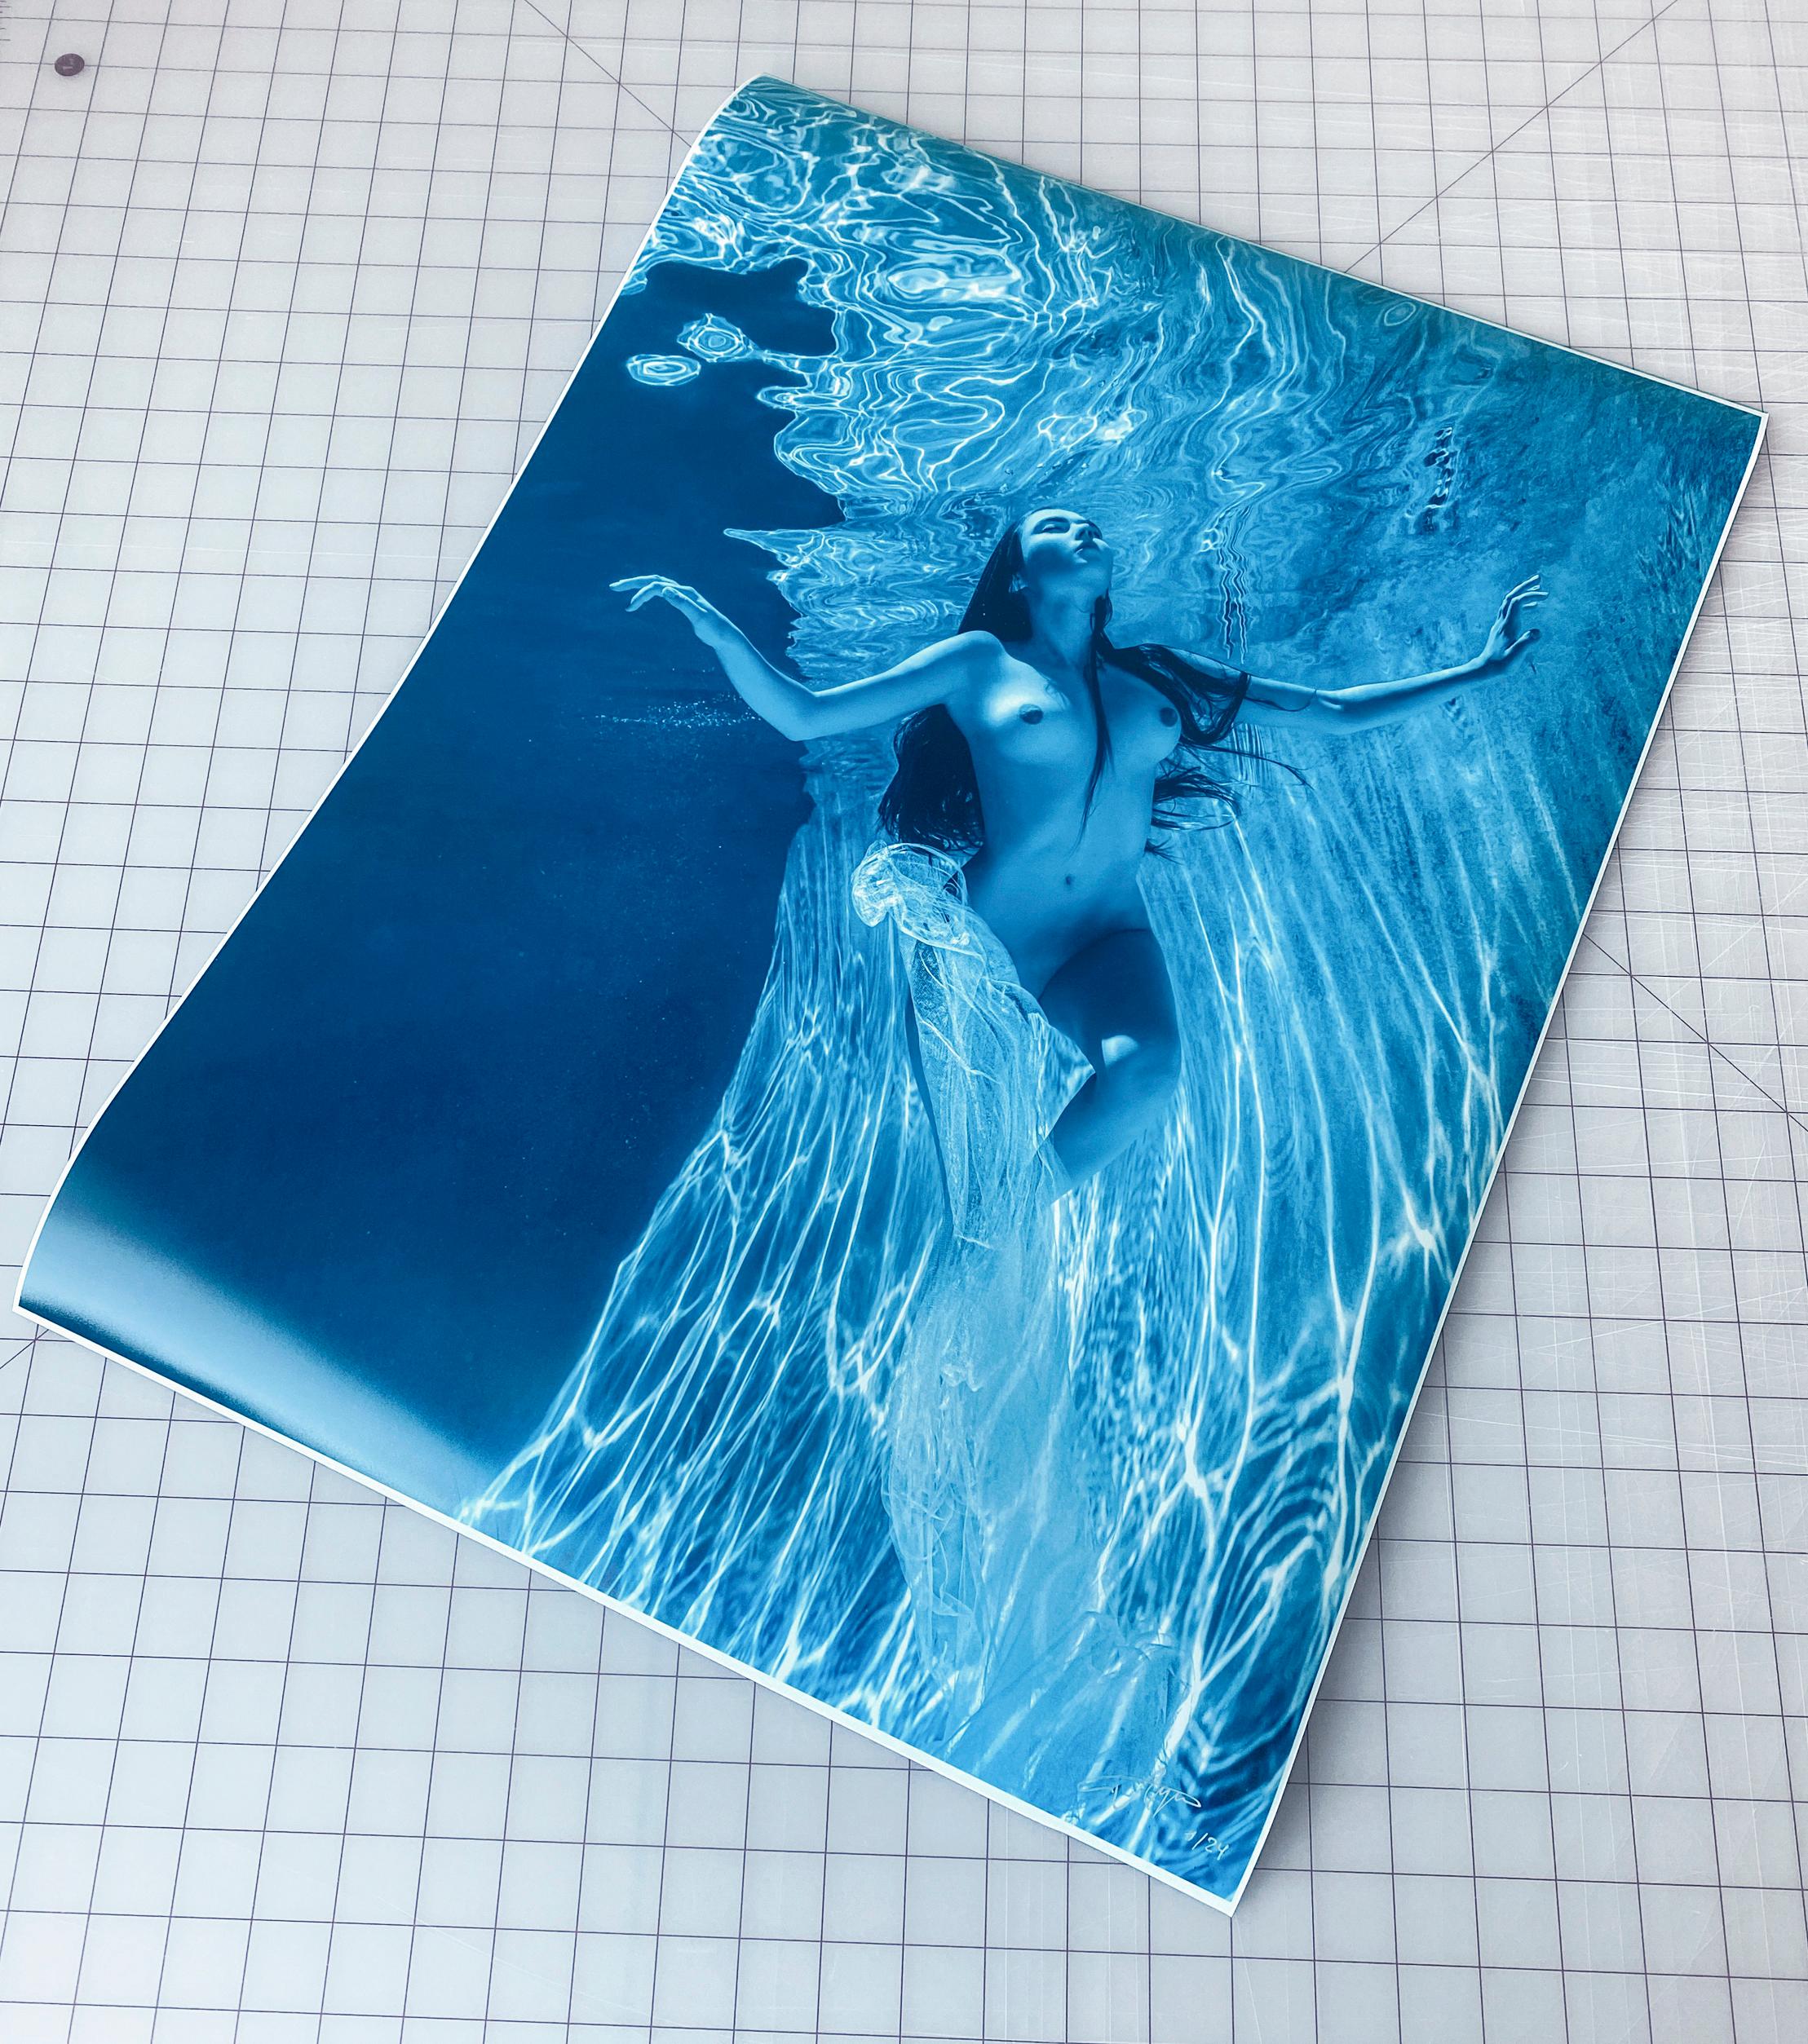 Freediver - underwater nude photograph - archival pigment print 47х35